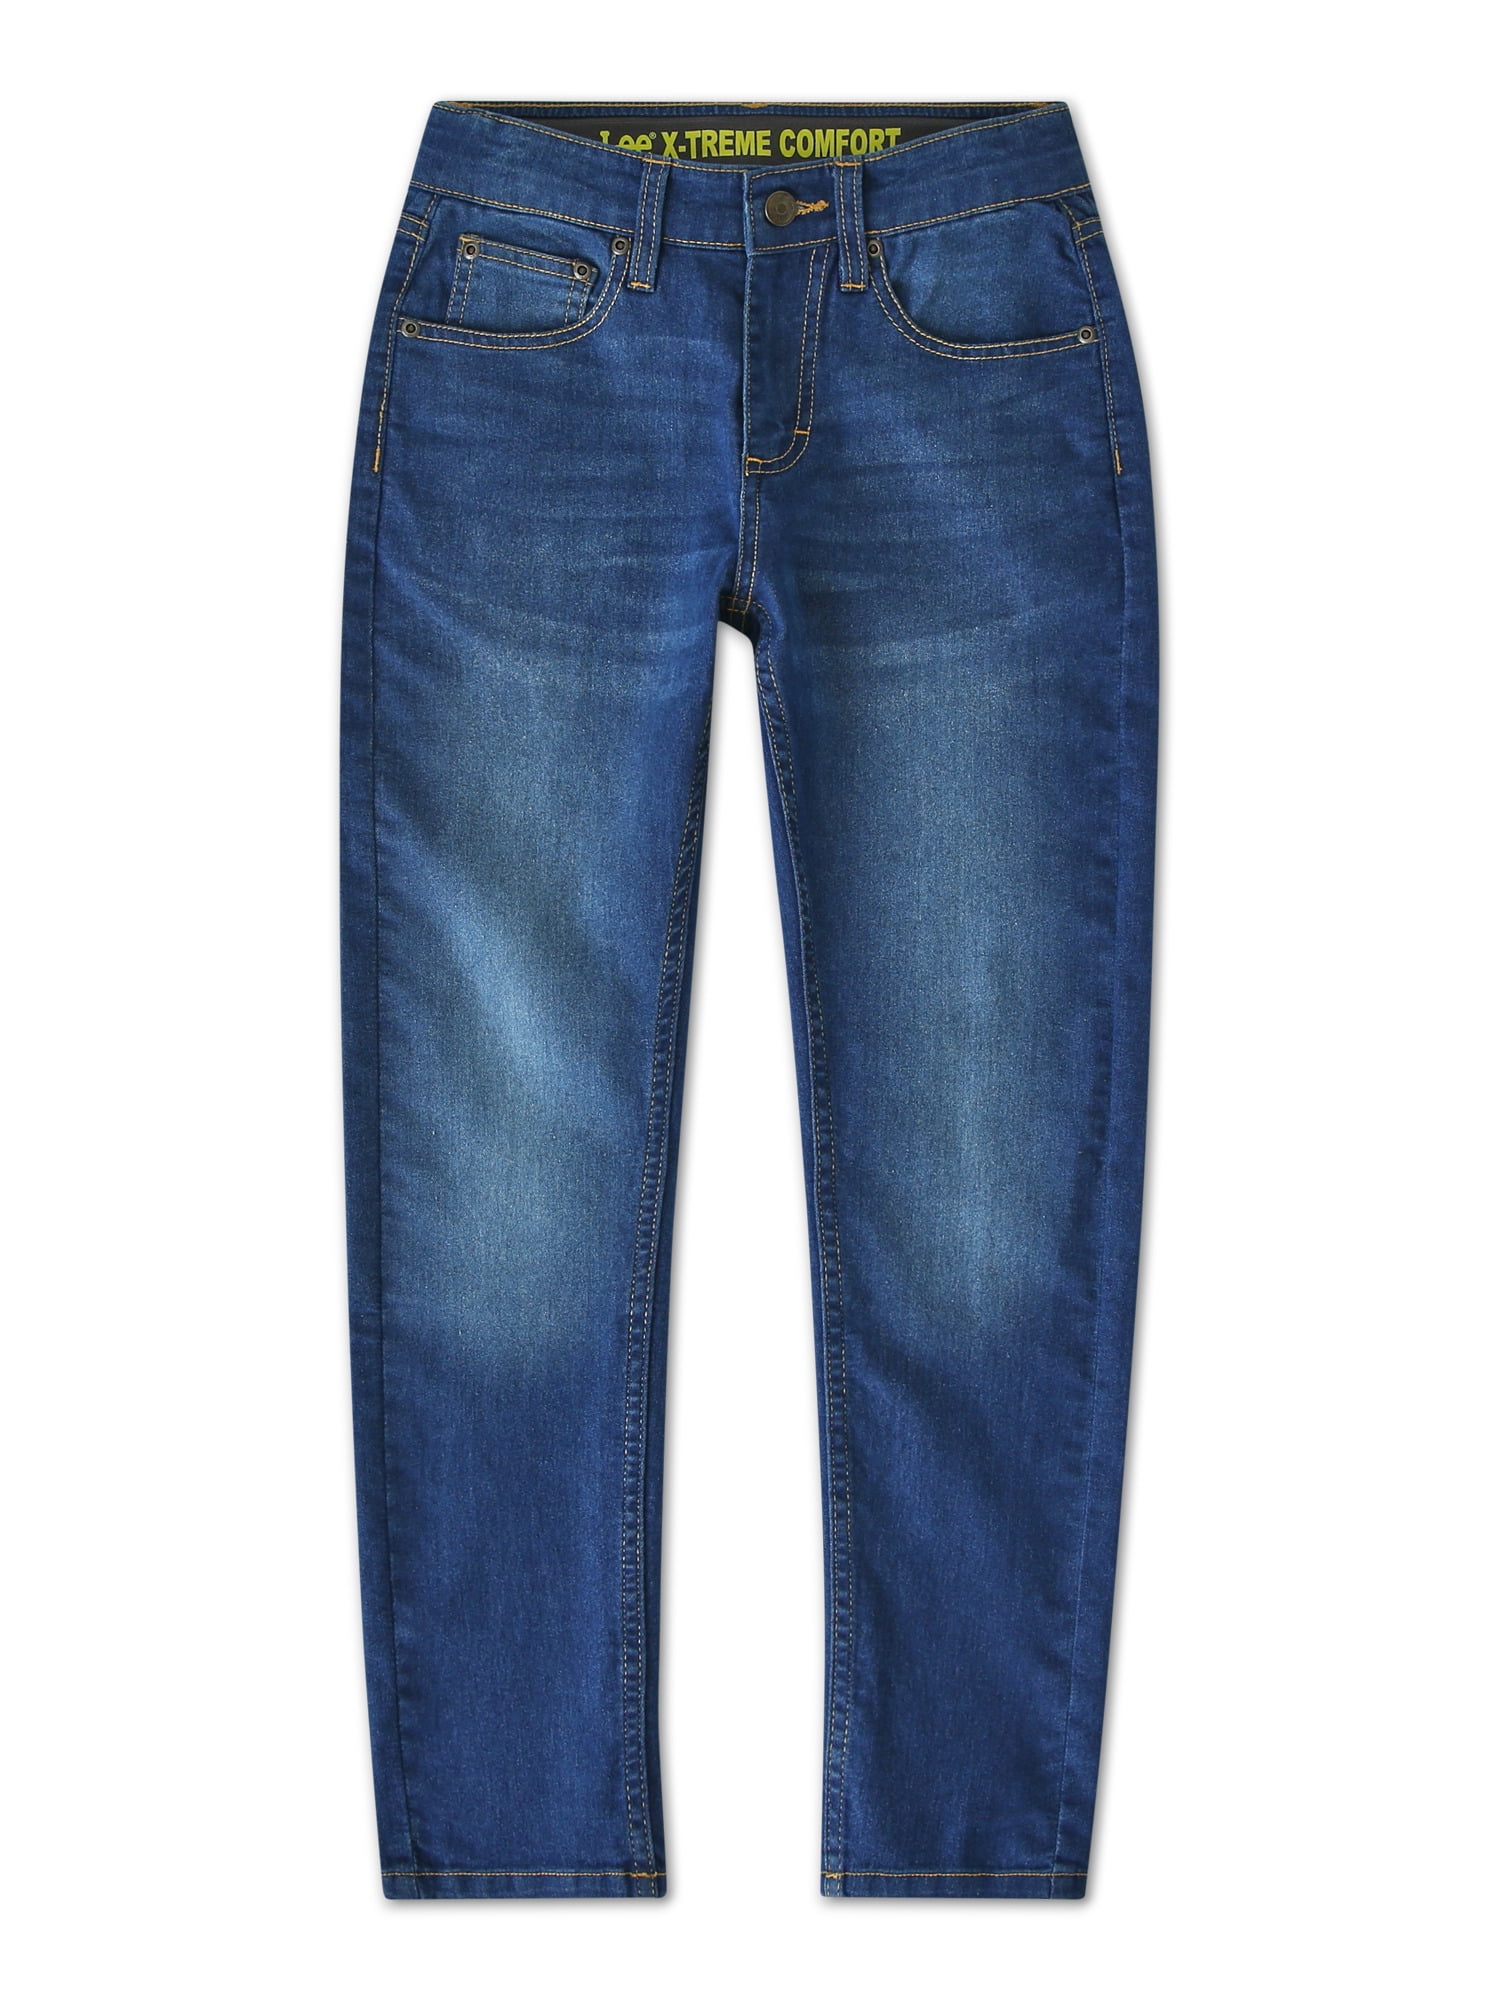 Lee Boys Premium Slim Stretch Jeans, Sizes 4-18 & Husky - Walmart.com